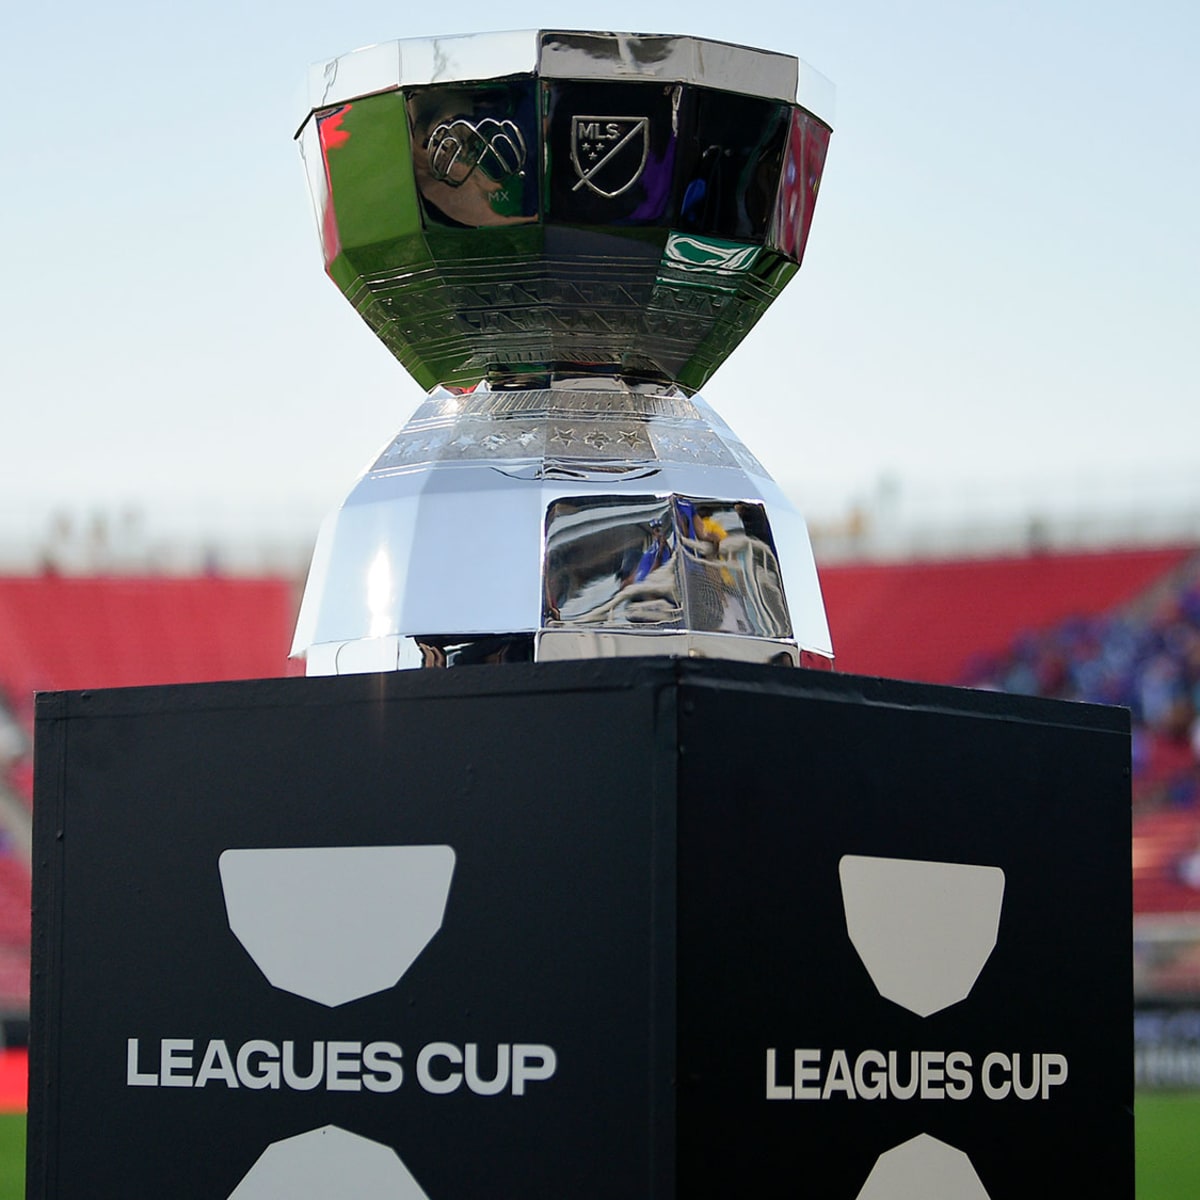 MLS and LIGA MX unveil Leagues Cup 2023 details